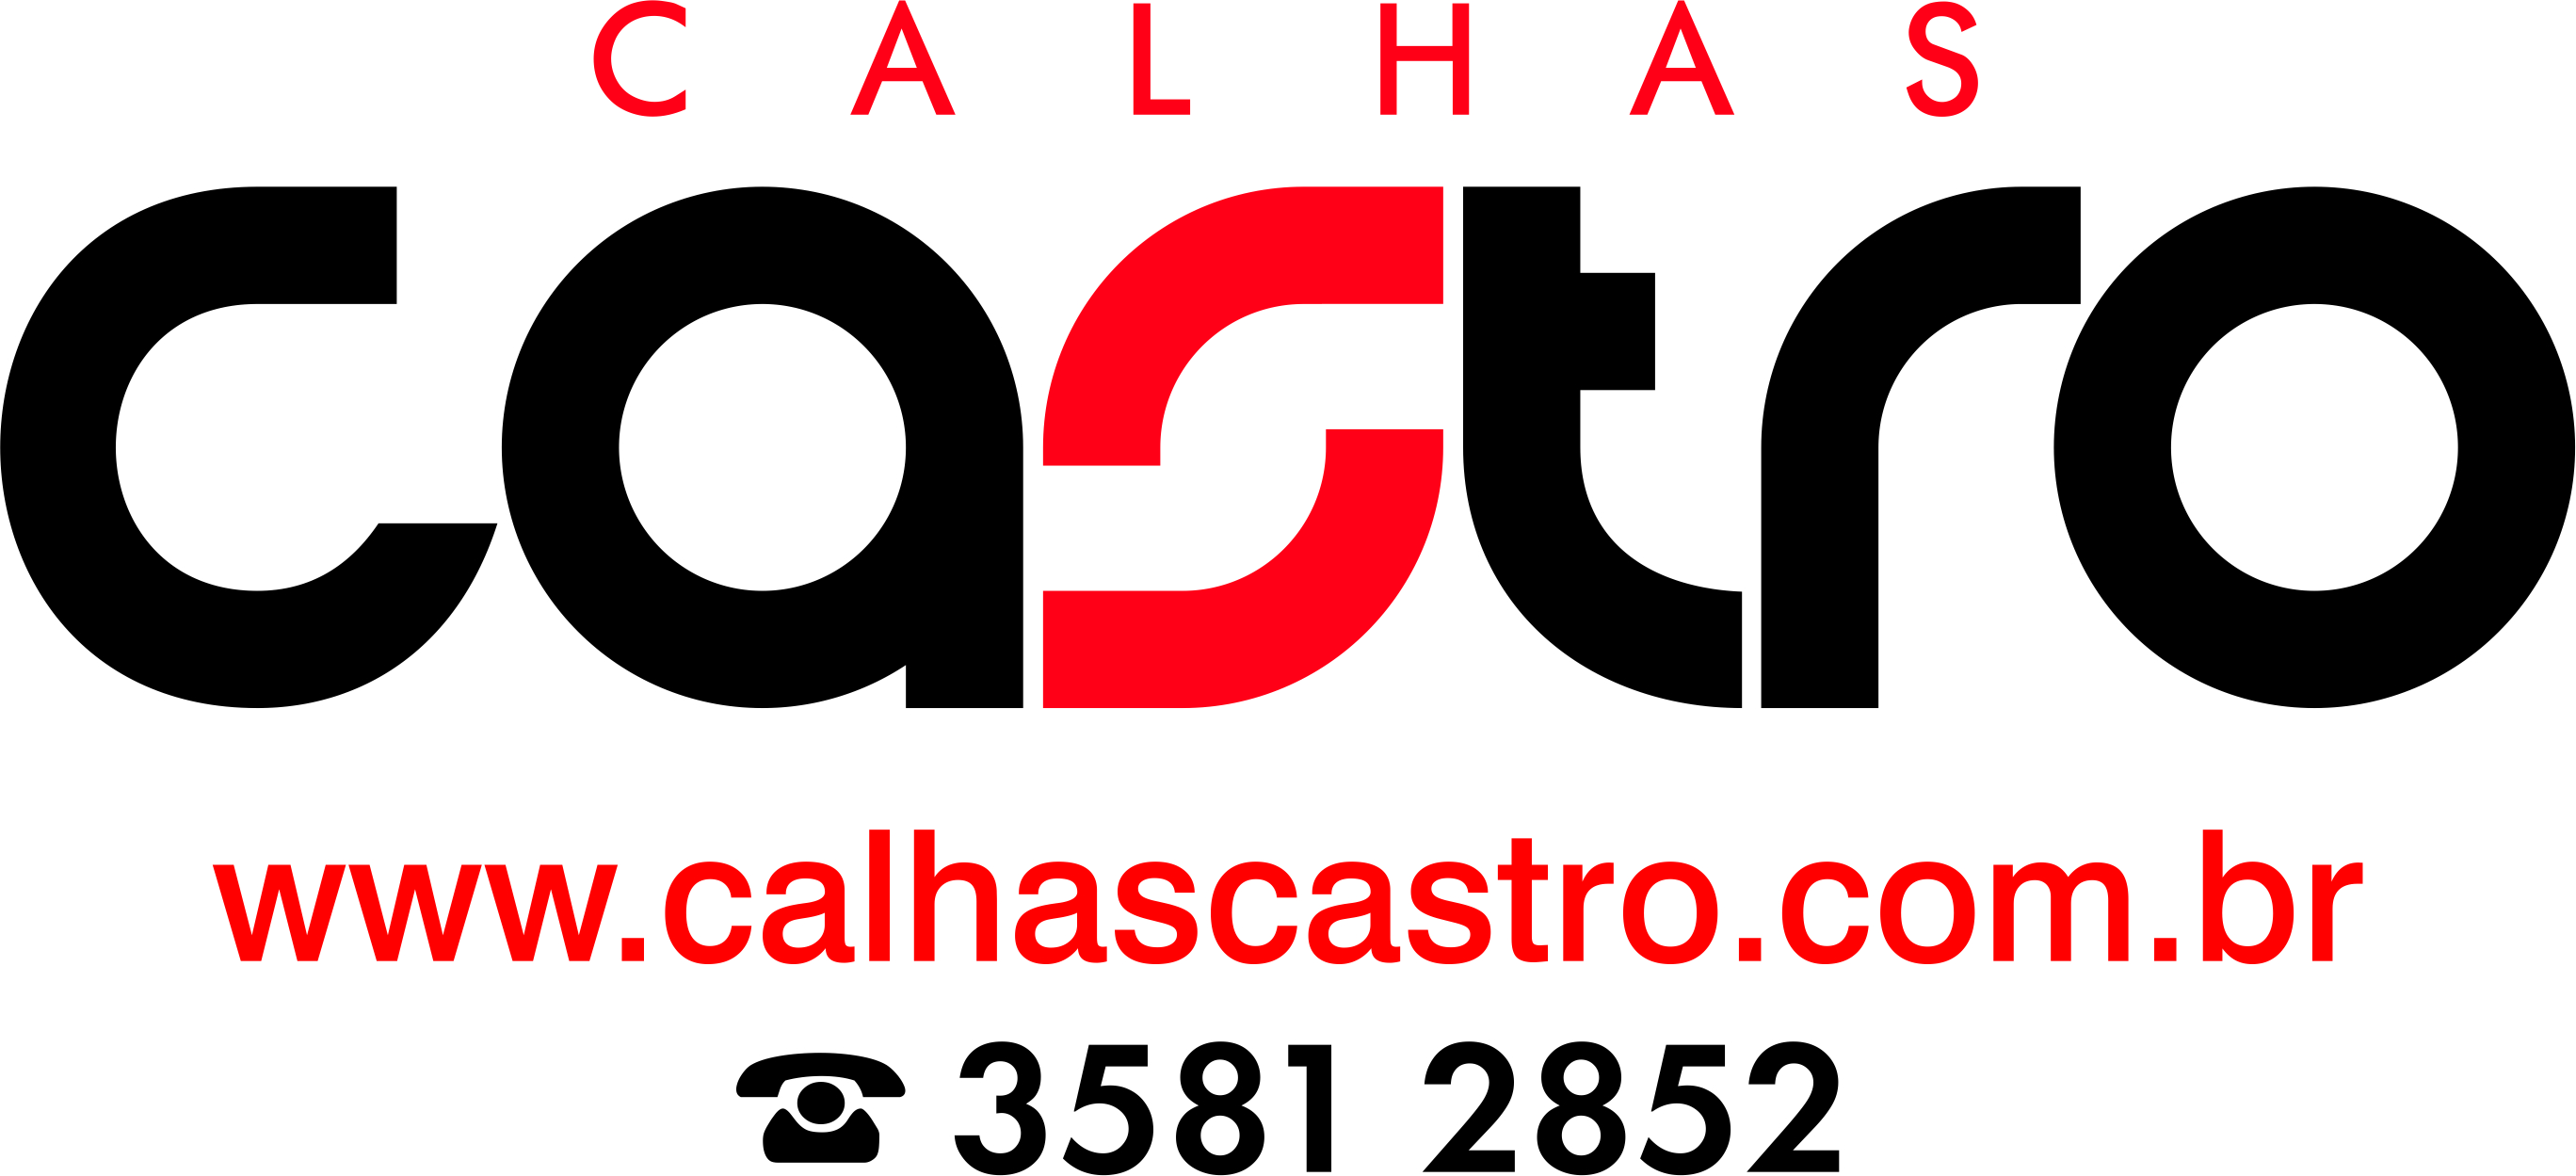 CASTRO logo